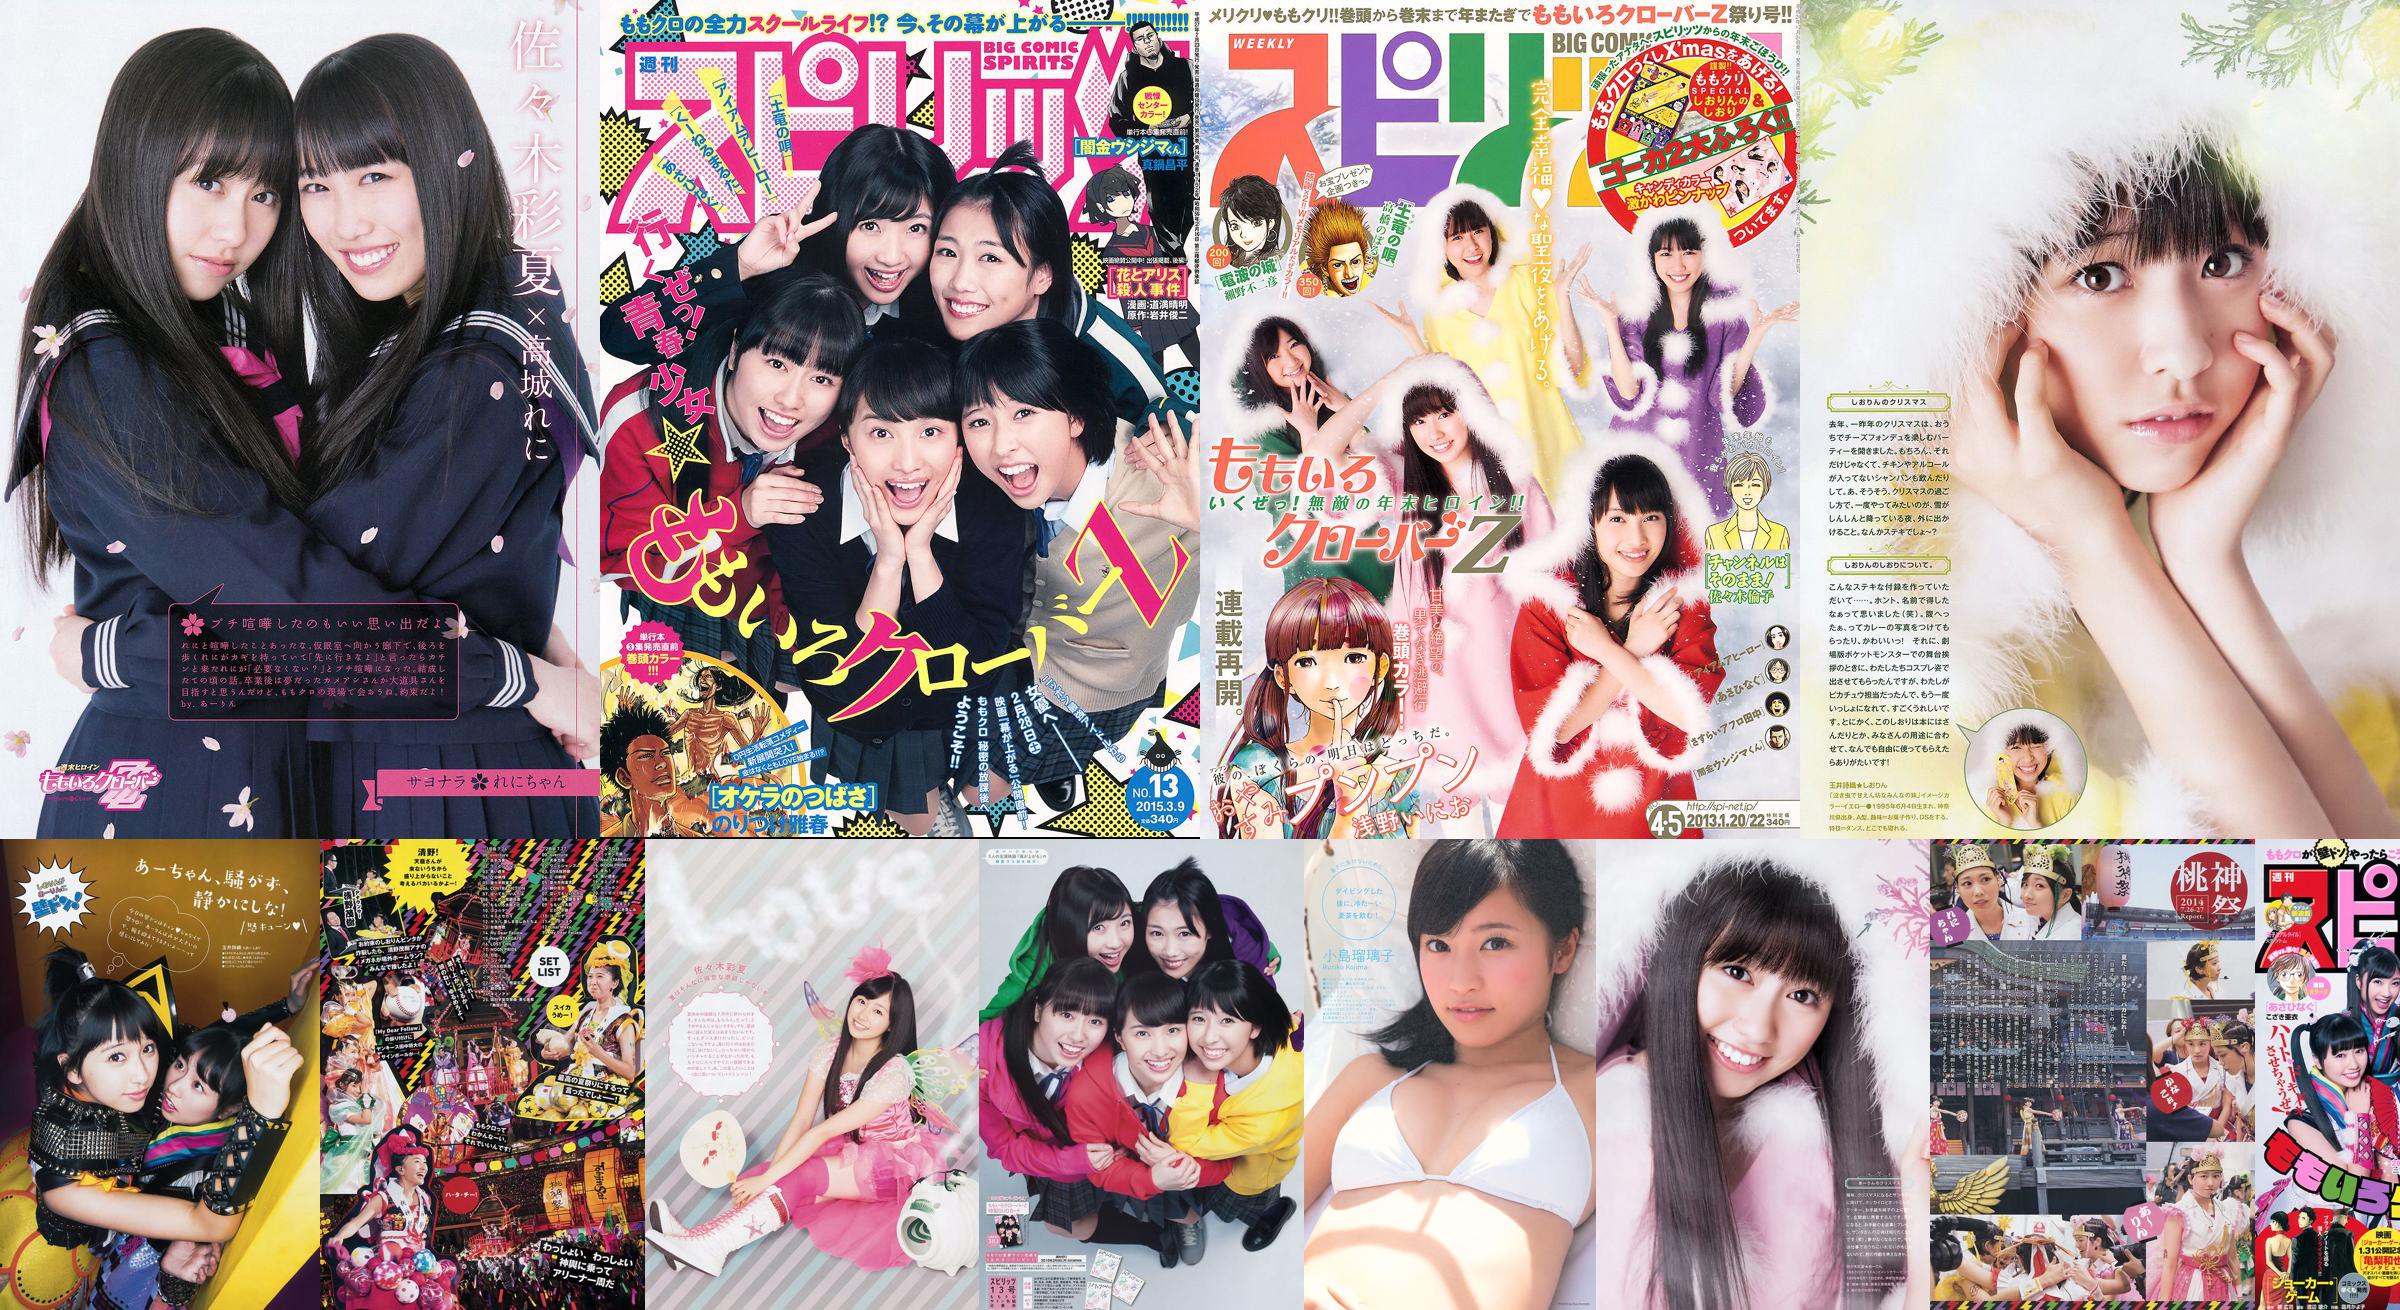 [Weekly Big Comic Spirits] も も い ろ ク ロ ー バ ー Z 2015 №13 Photo Magazine No.52d22a Страница 1